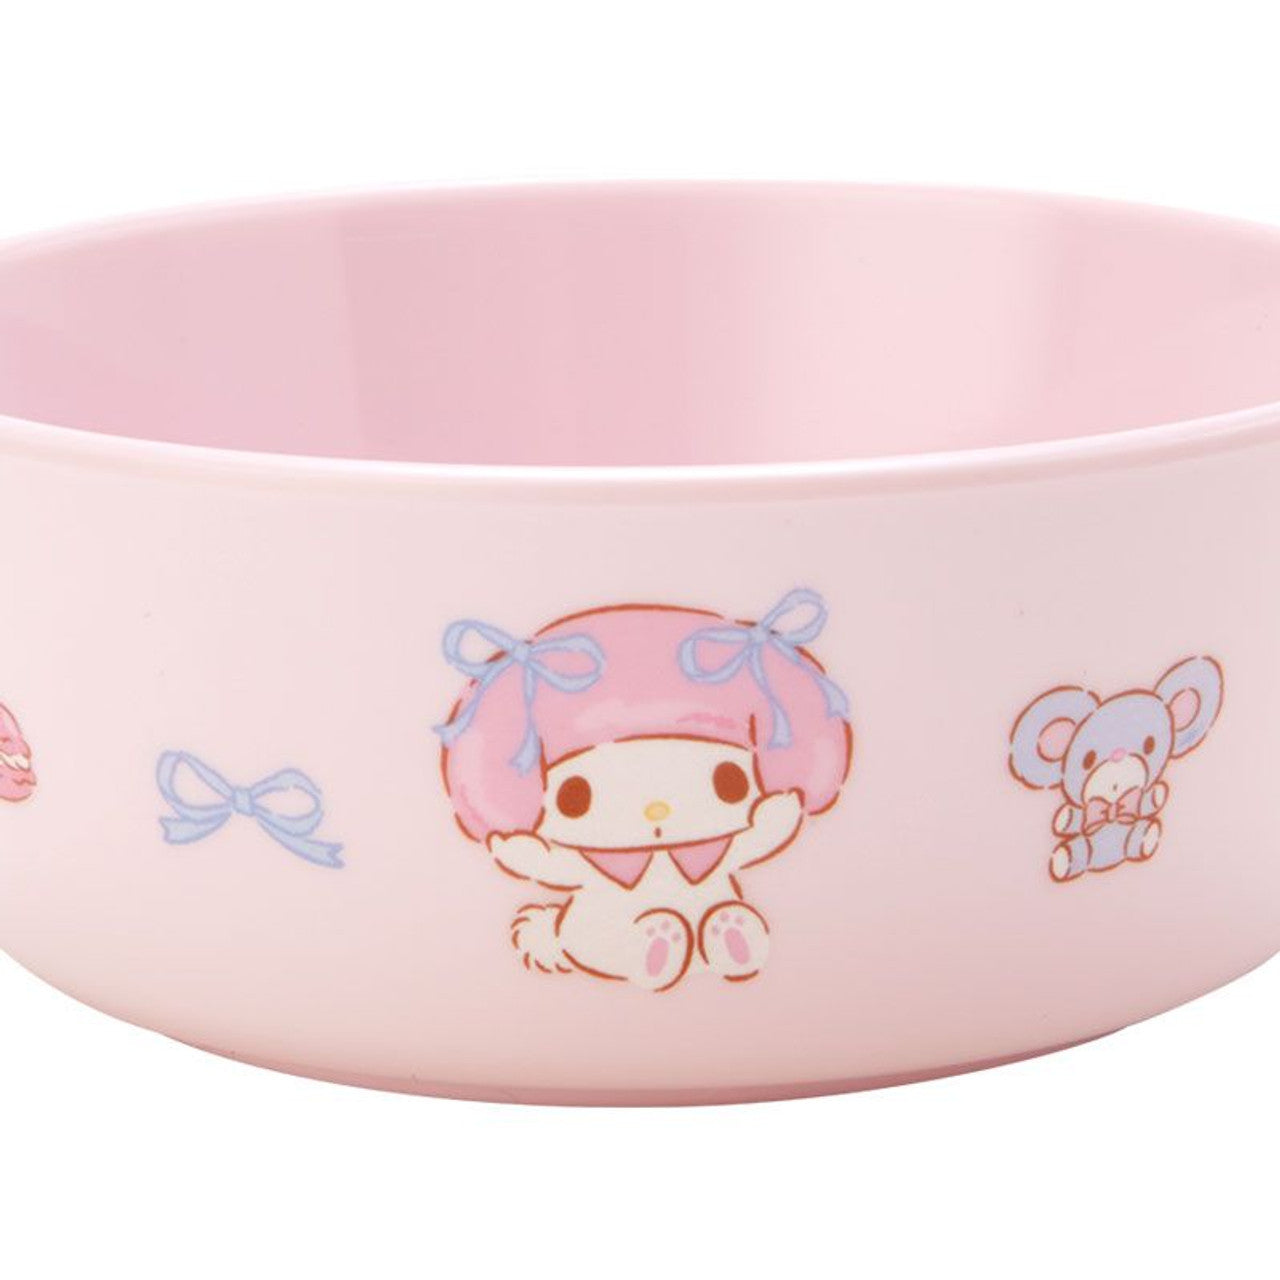 Sanrio My Melody Melamine Bowl (837024)